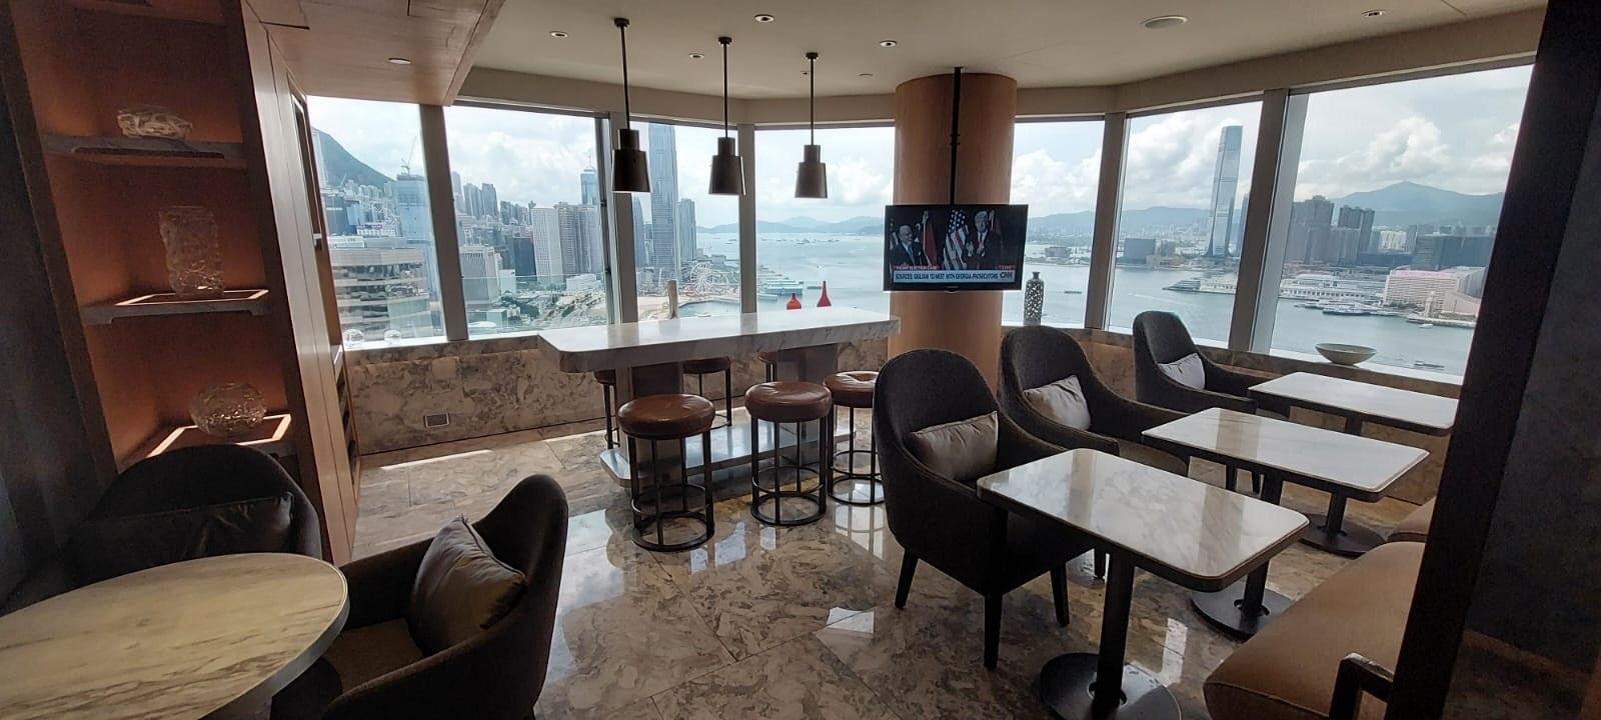 Renaissance Hong Kong Harbour View Hotel Executive Club Lounge Overview